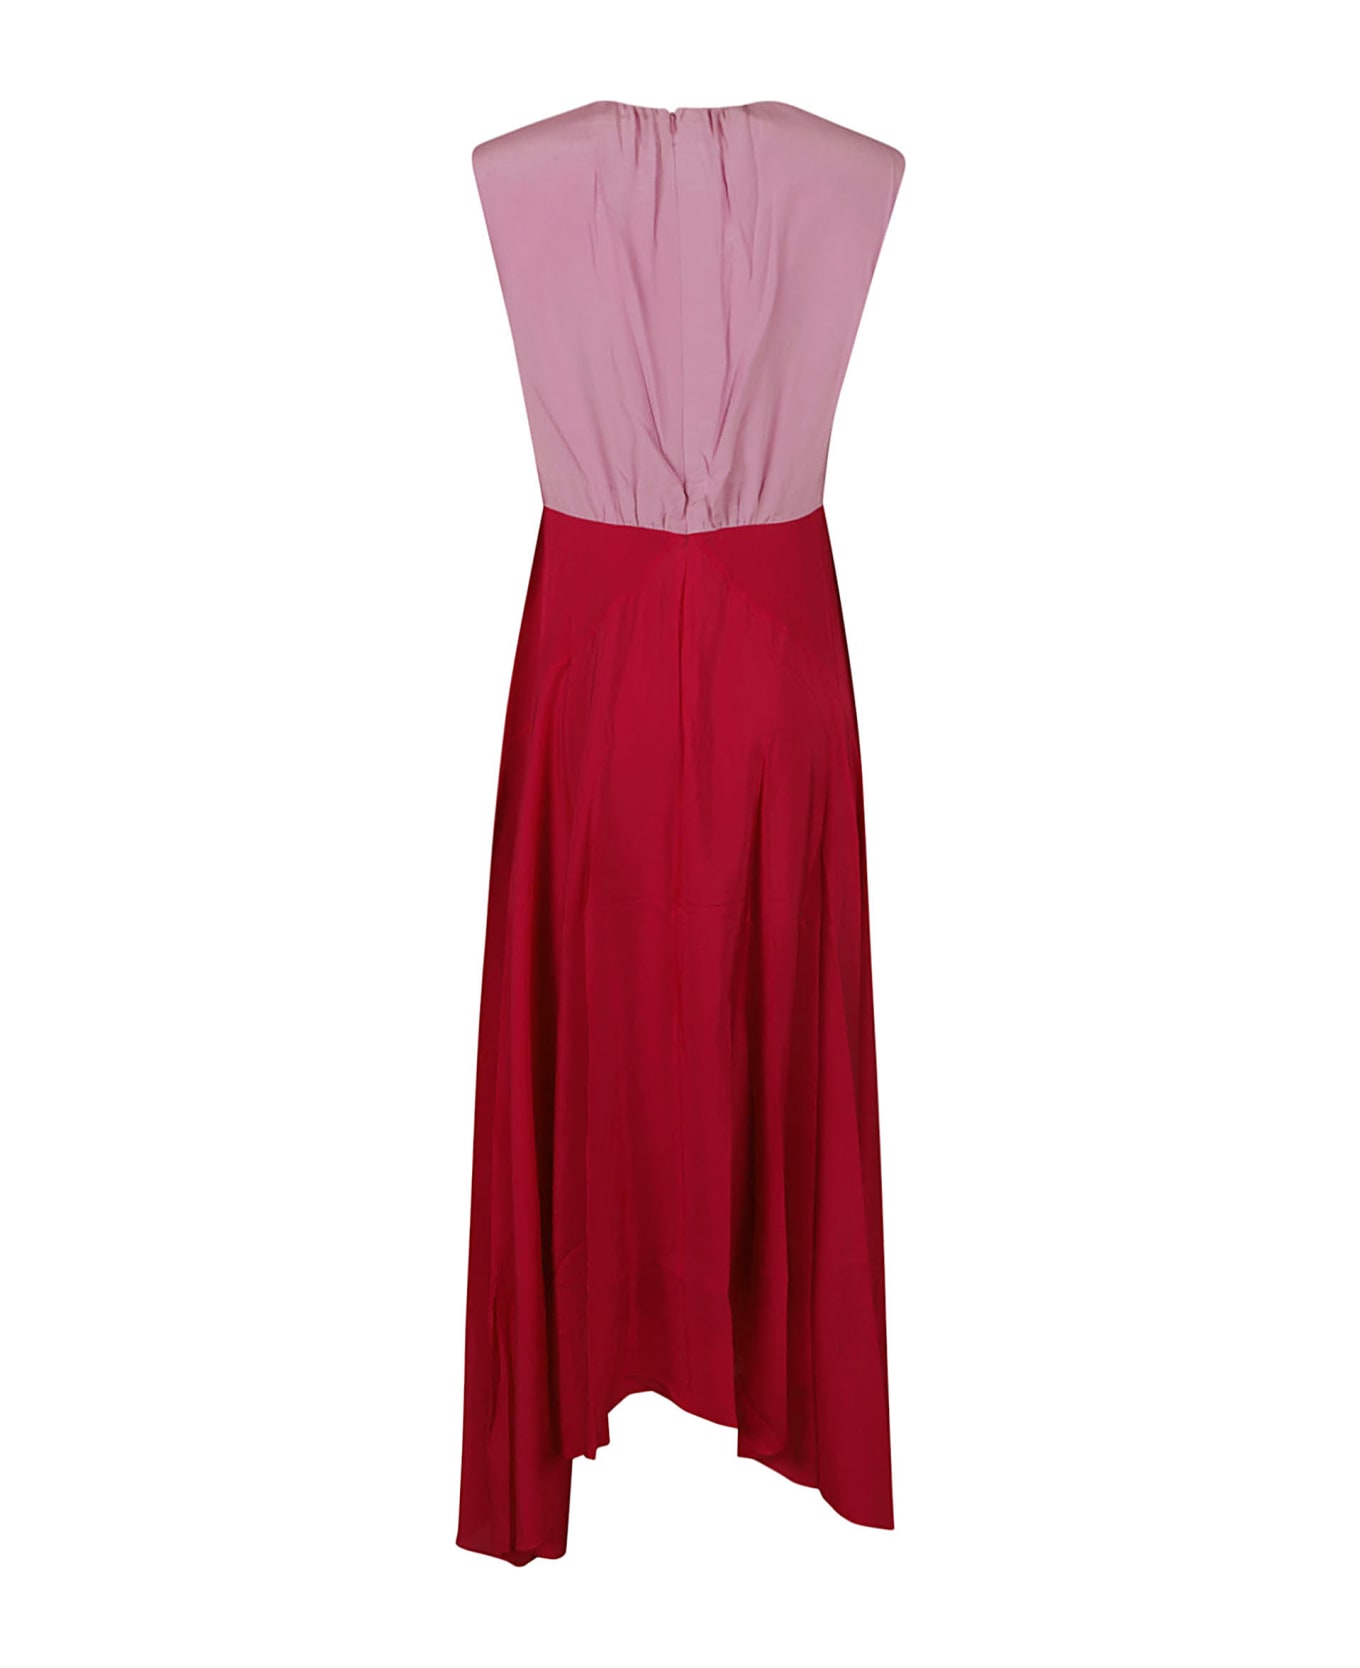 Saloni Divya Dress - Light Peony/Raspberry